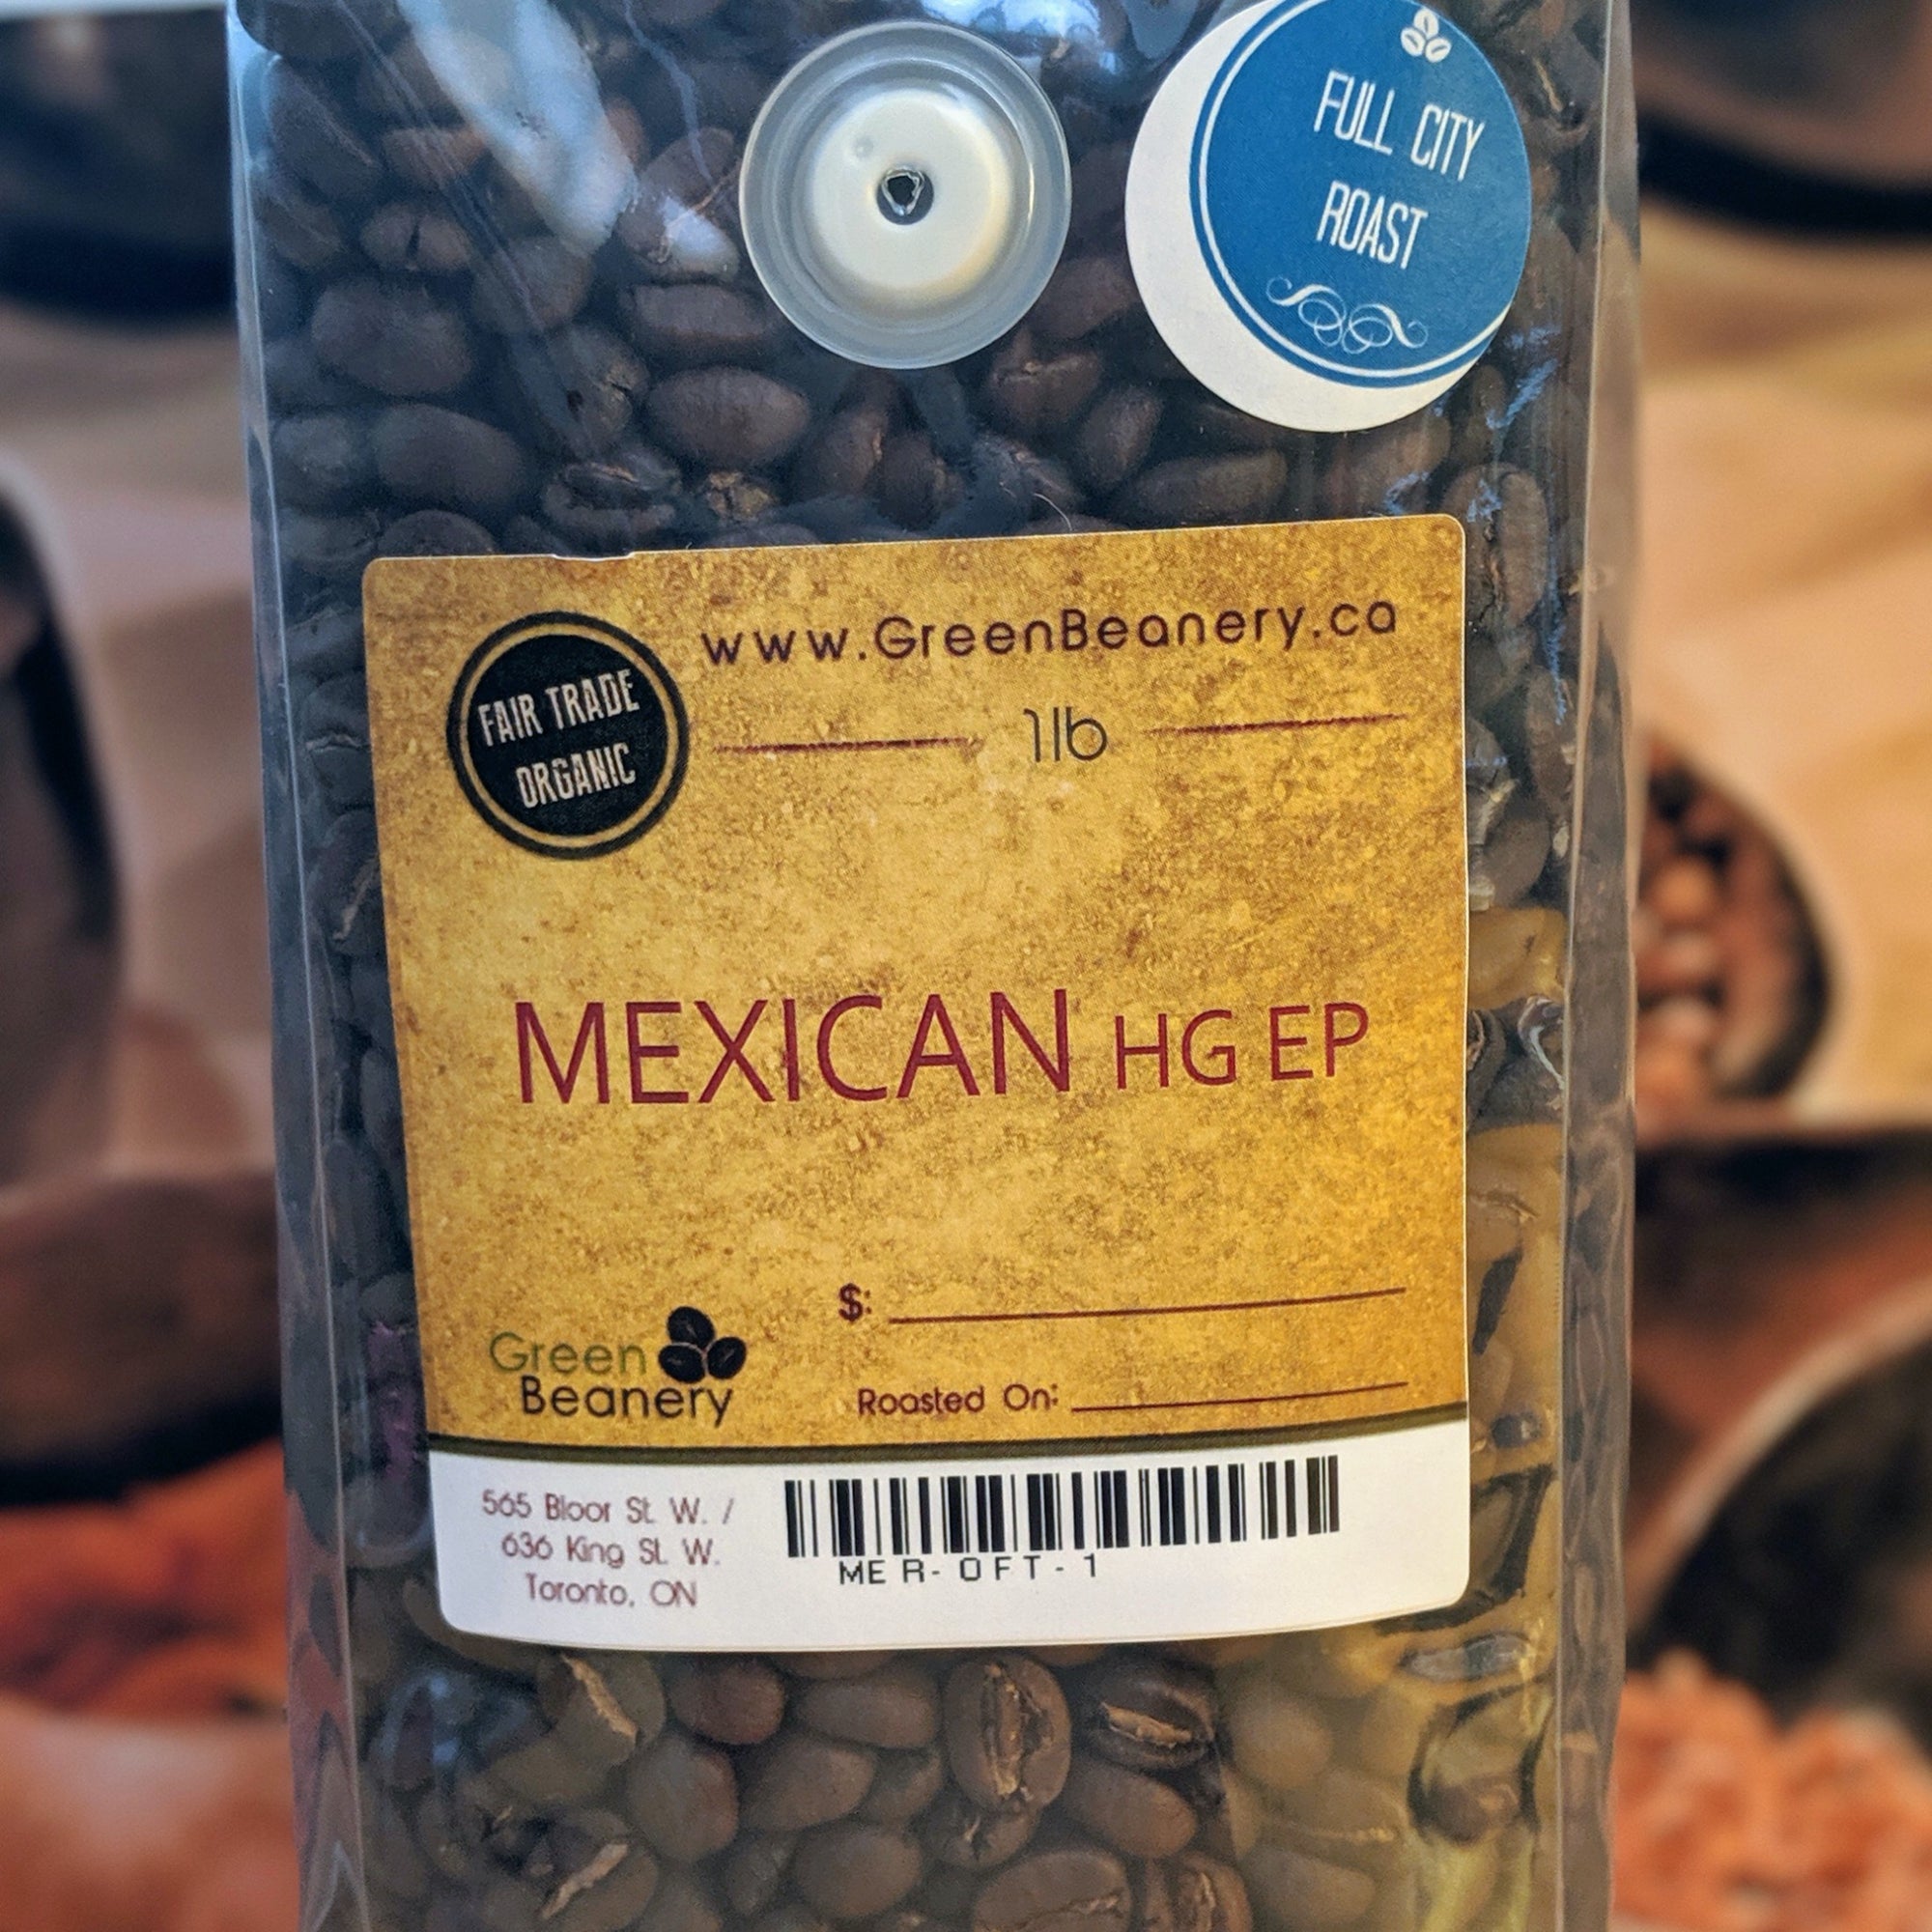 Roasted - Mexican Chiapas HG EP Fair Trade Organic (Coffee of the Week)